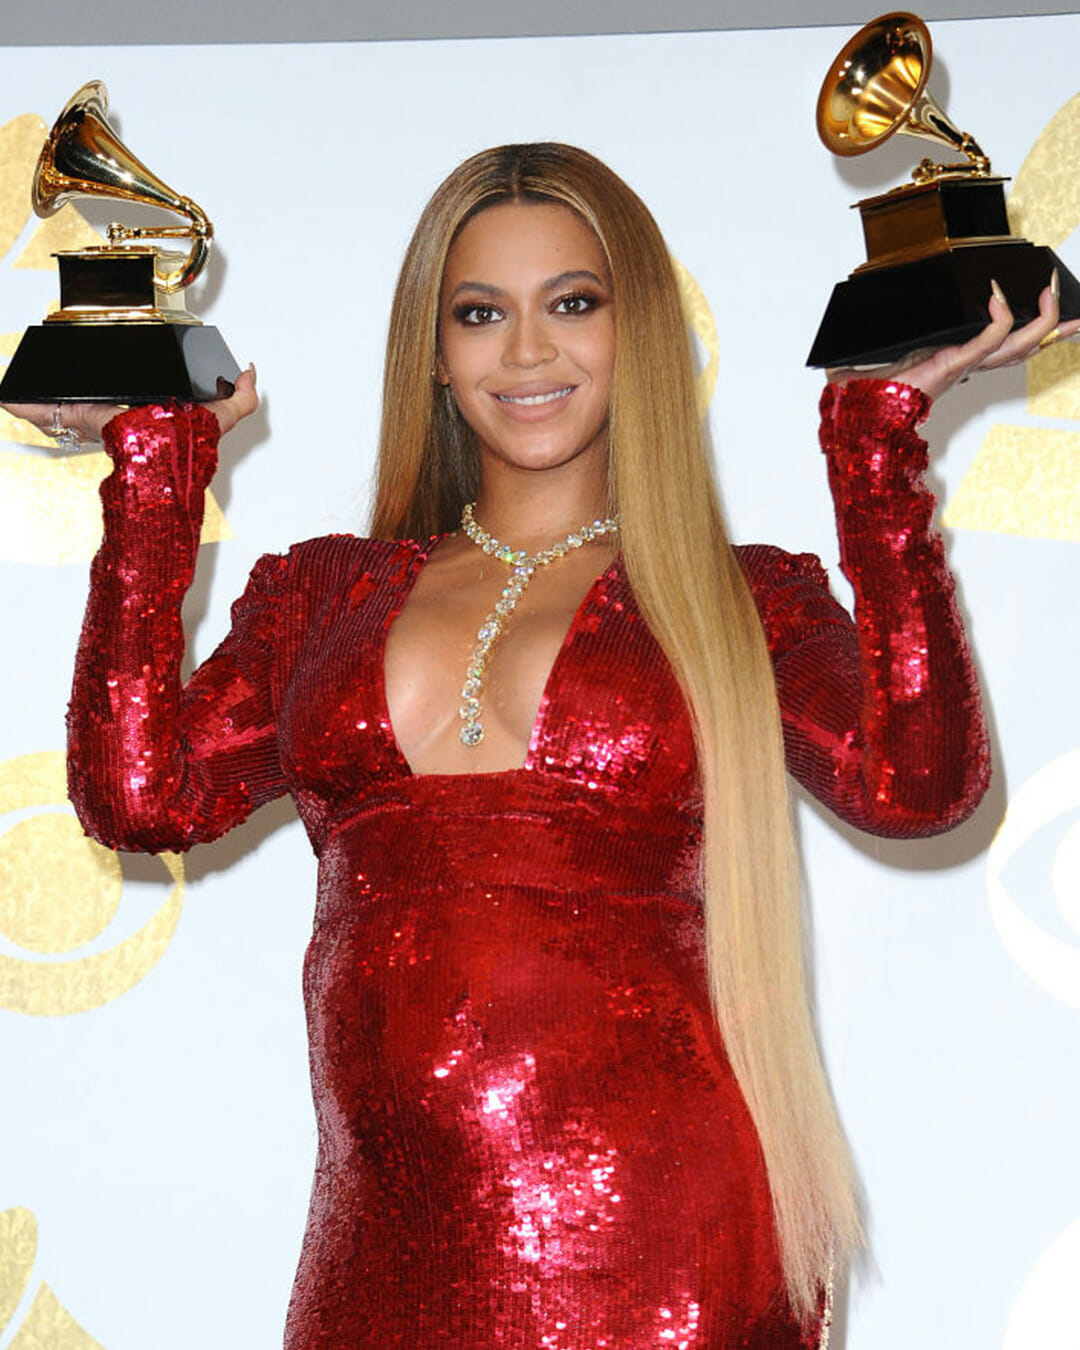 Beyoncé wearing a 400-carat Lorraine Schwartz diamond necklace during the 2017 Grammys.